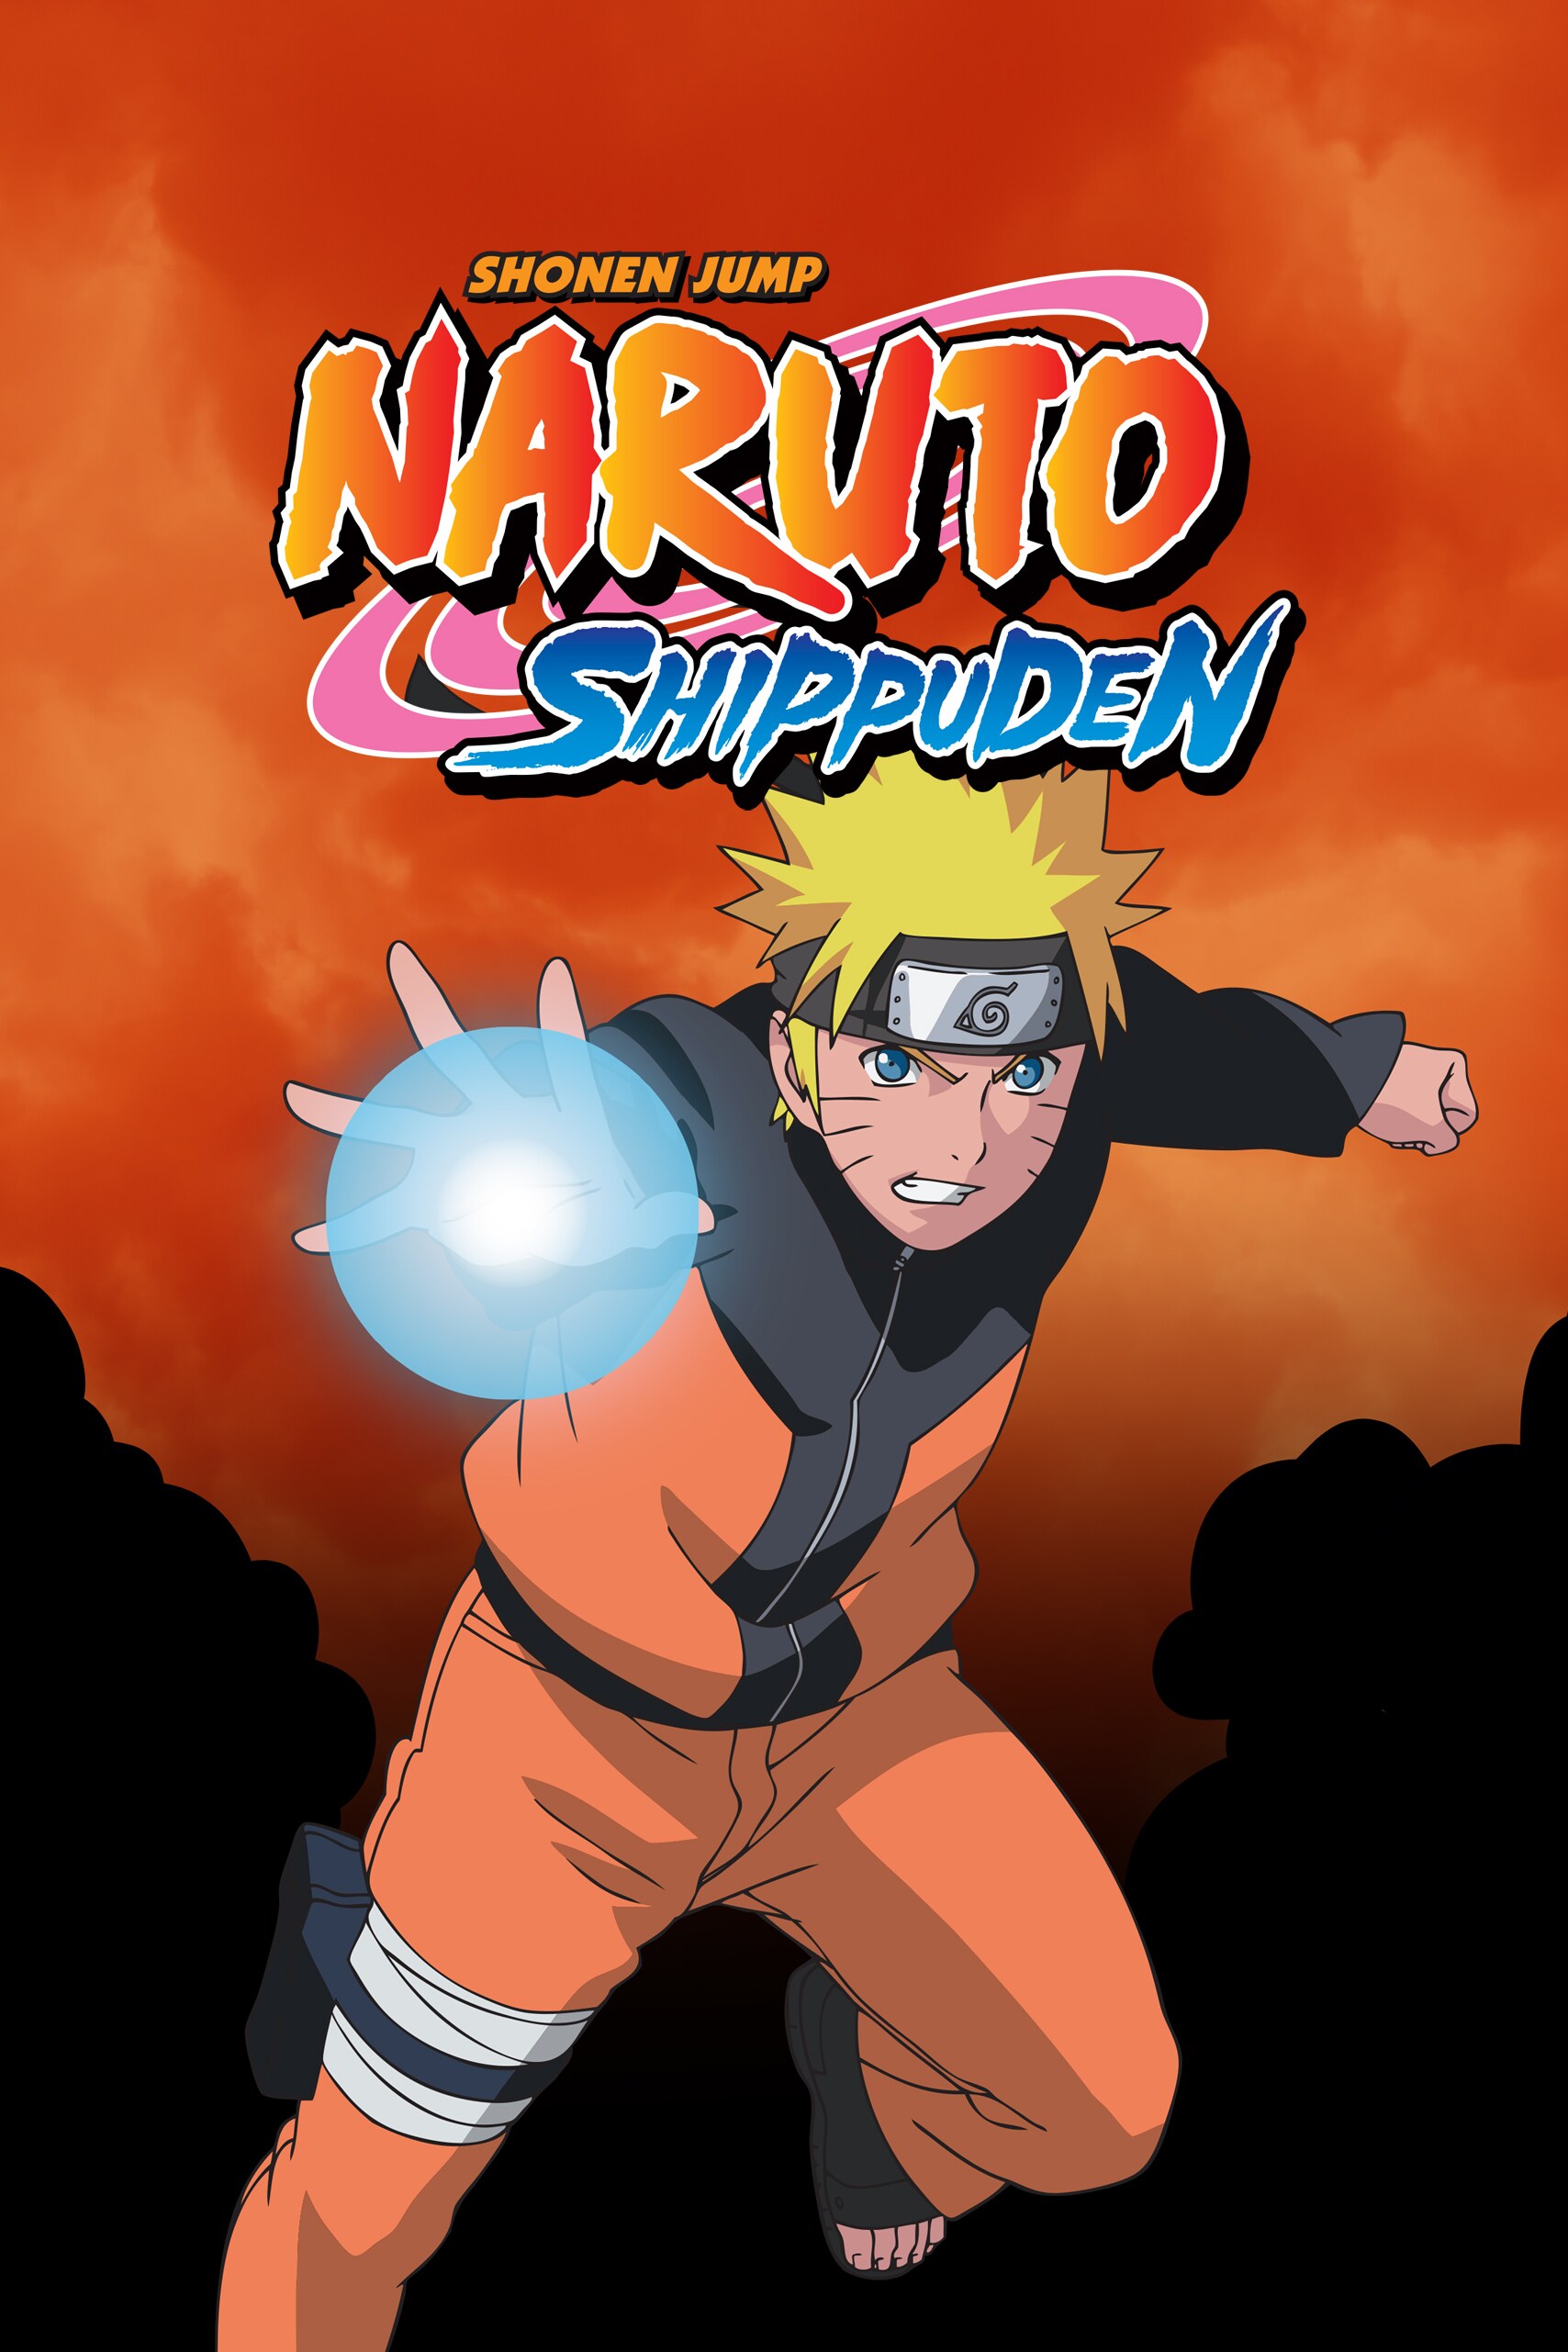 Naruto Shippuden YA LLEGA A CLARO VIDEO en LATINO